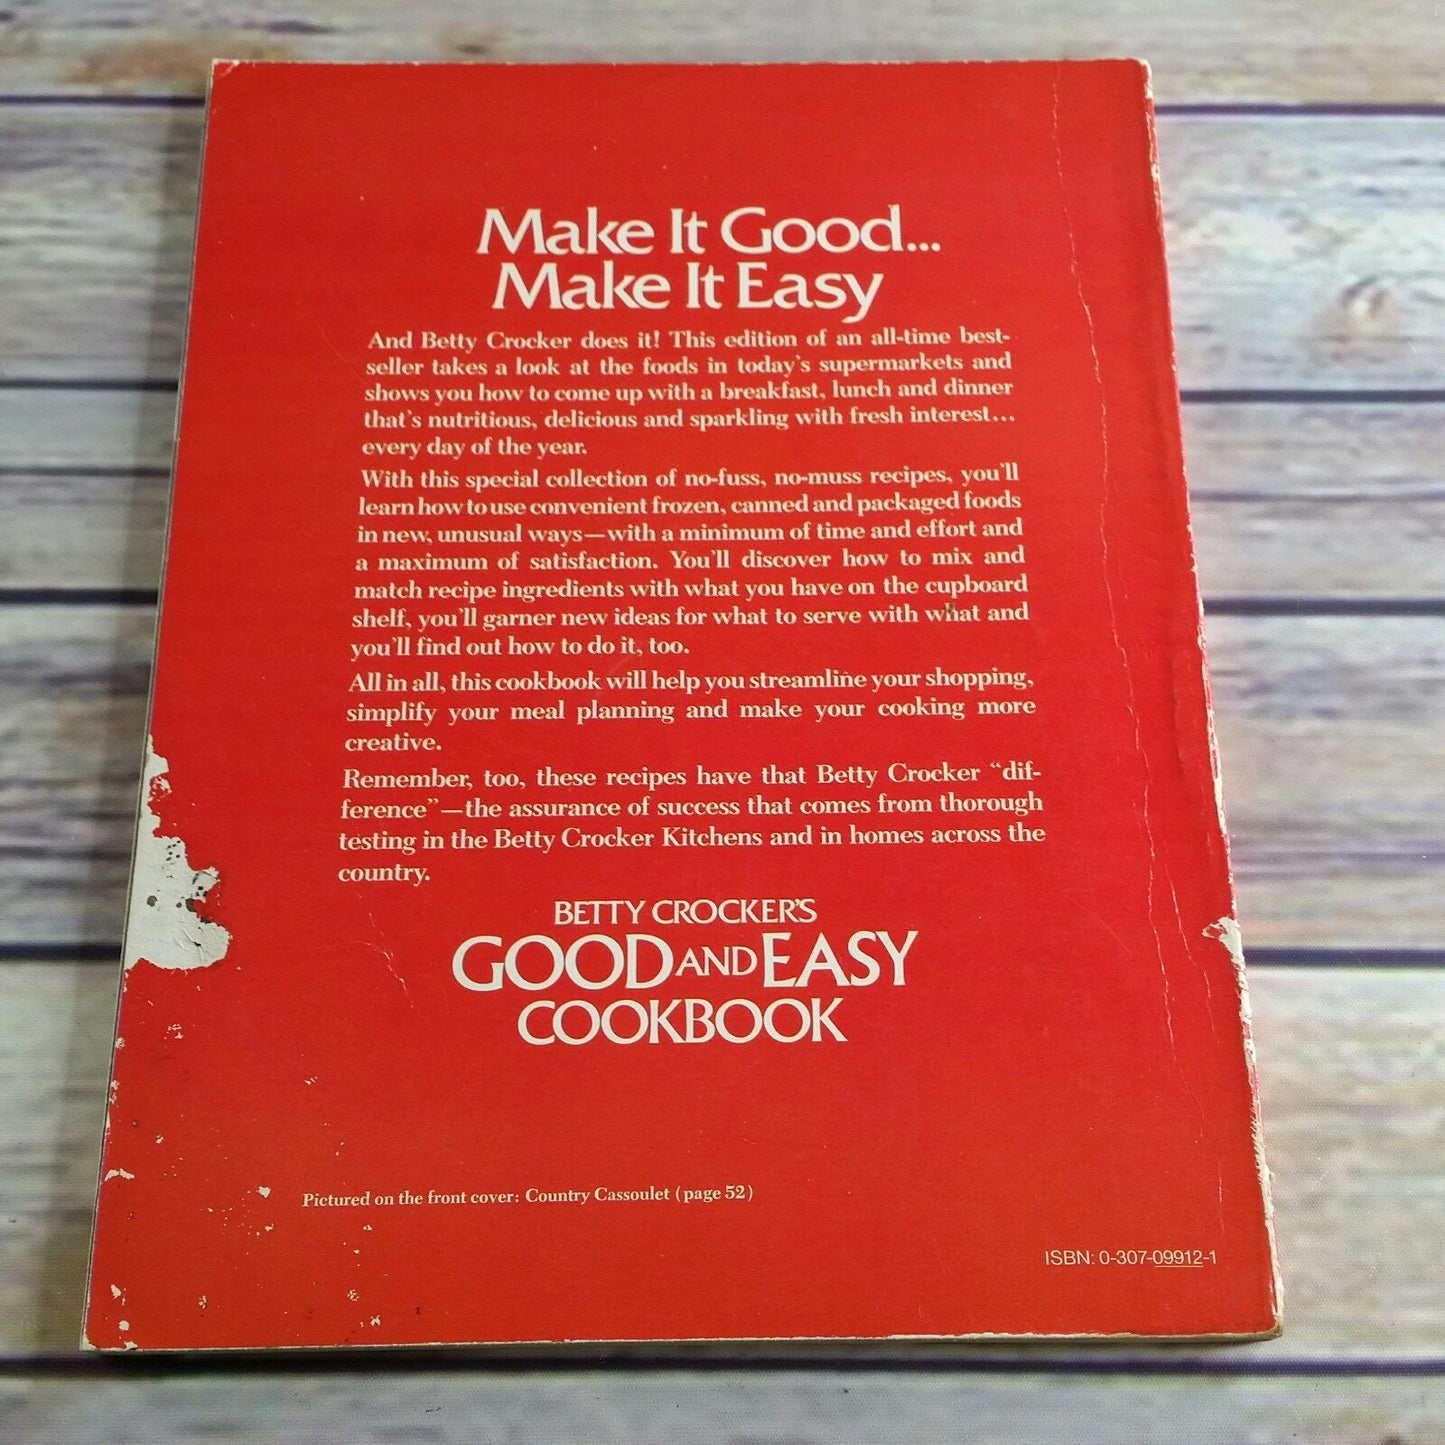 Vintage Betty Crocker Cookbook Good and Easy 1978 Recipes Paperback Golden Press General Mills Meats Side Dishes Desserts Brunch Lunch